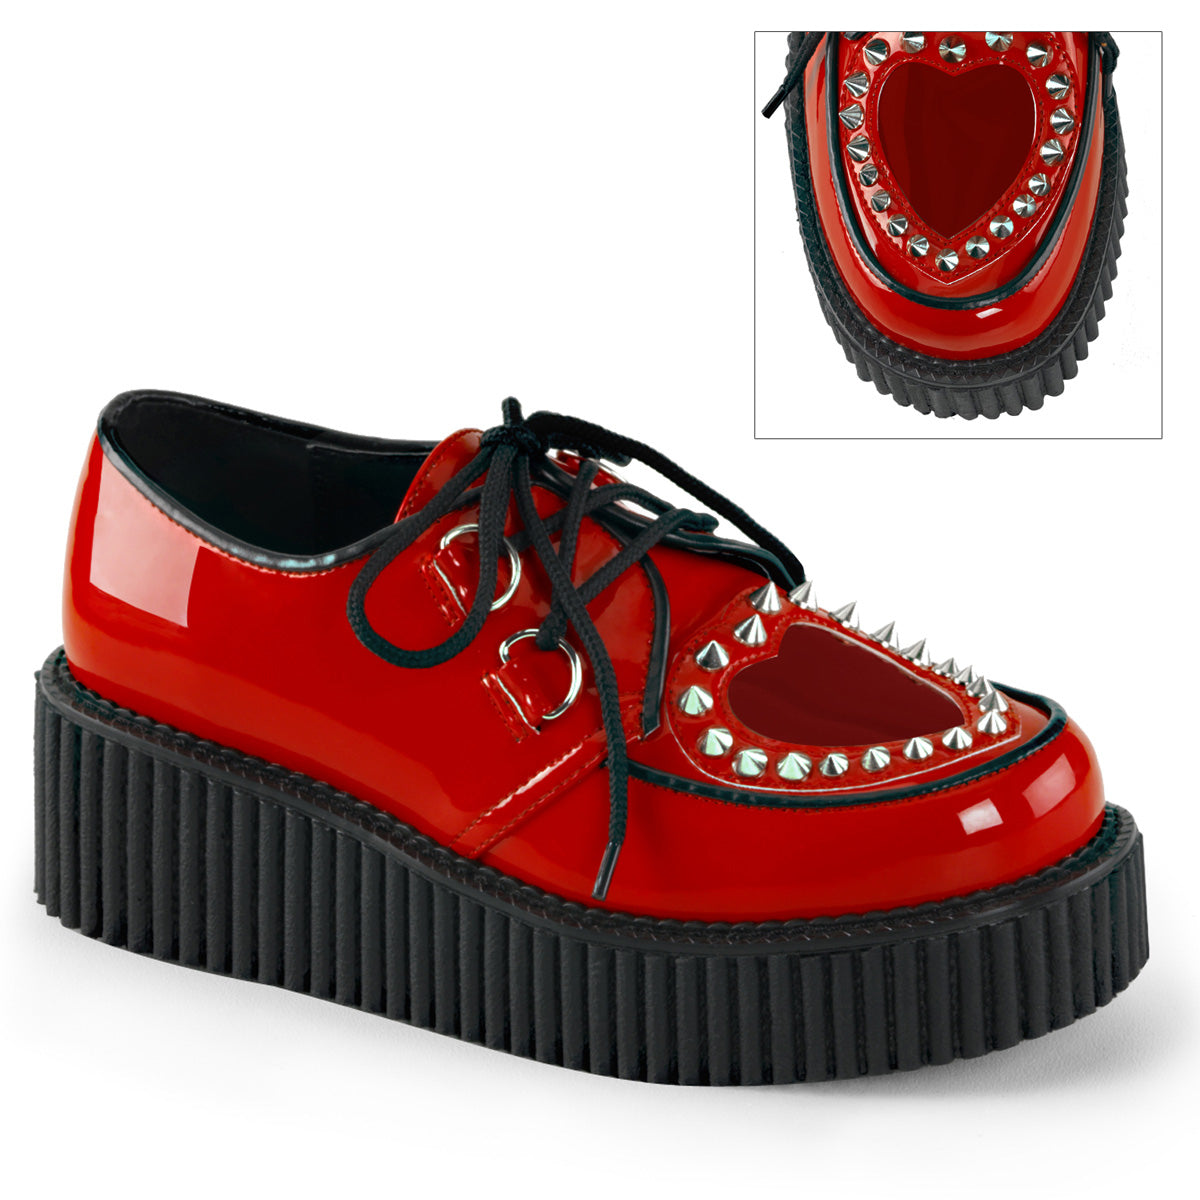 DemoniaCult Zapato bajo para mujer CREEPER-108 PAT-PVC rojo